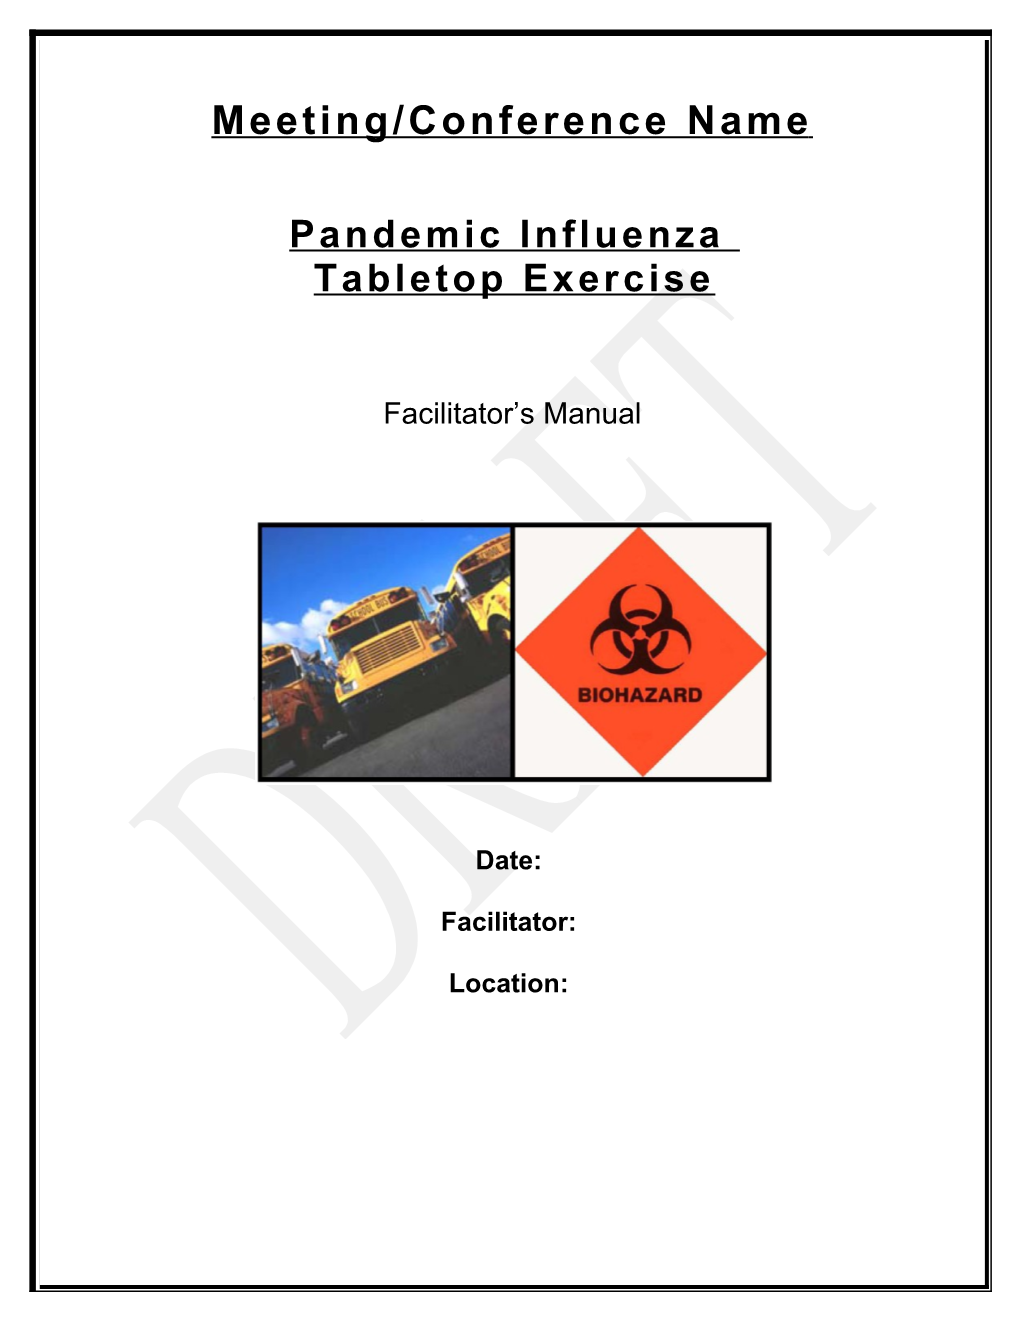 Pandemic Influenza - Facilitator's Manual